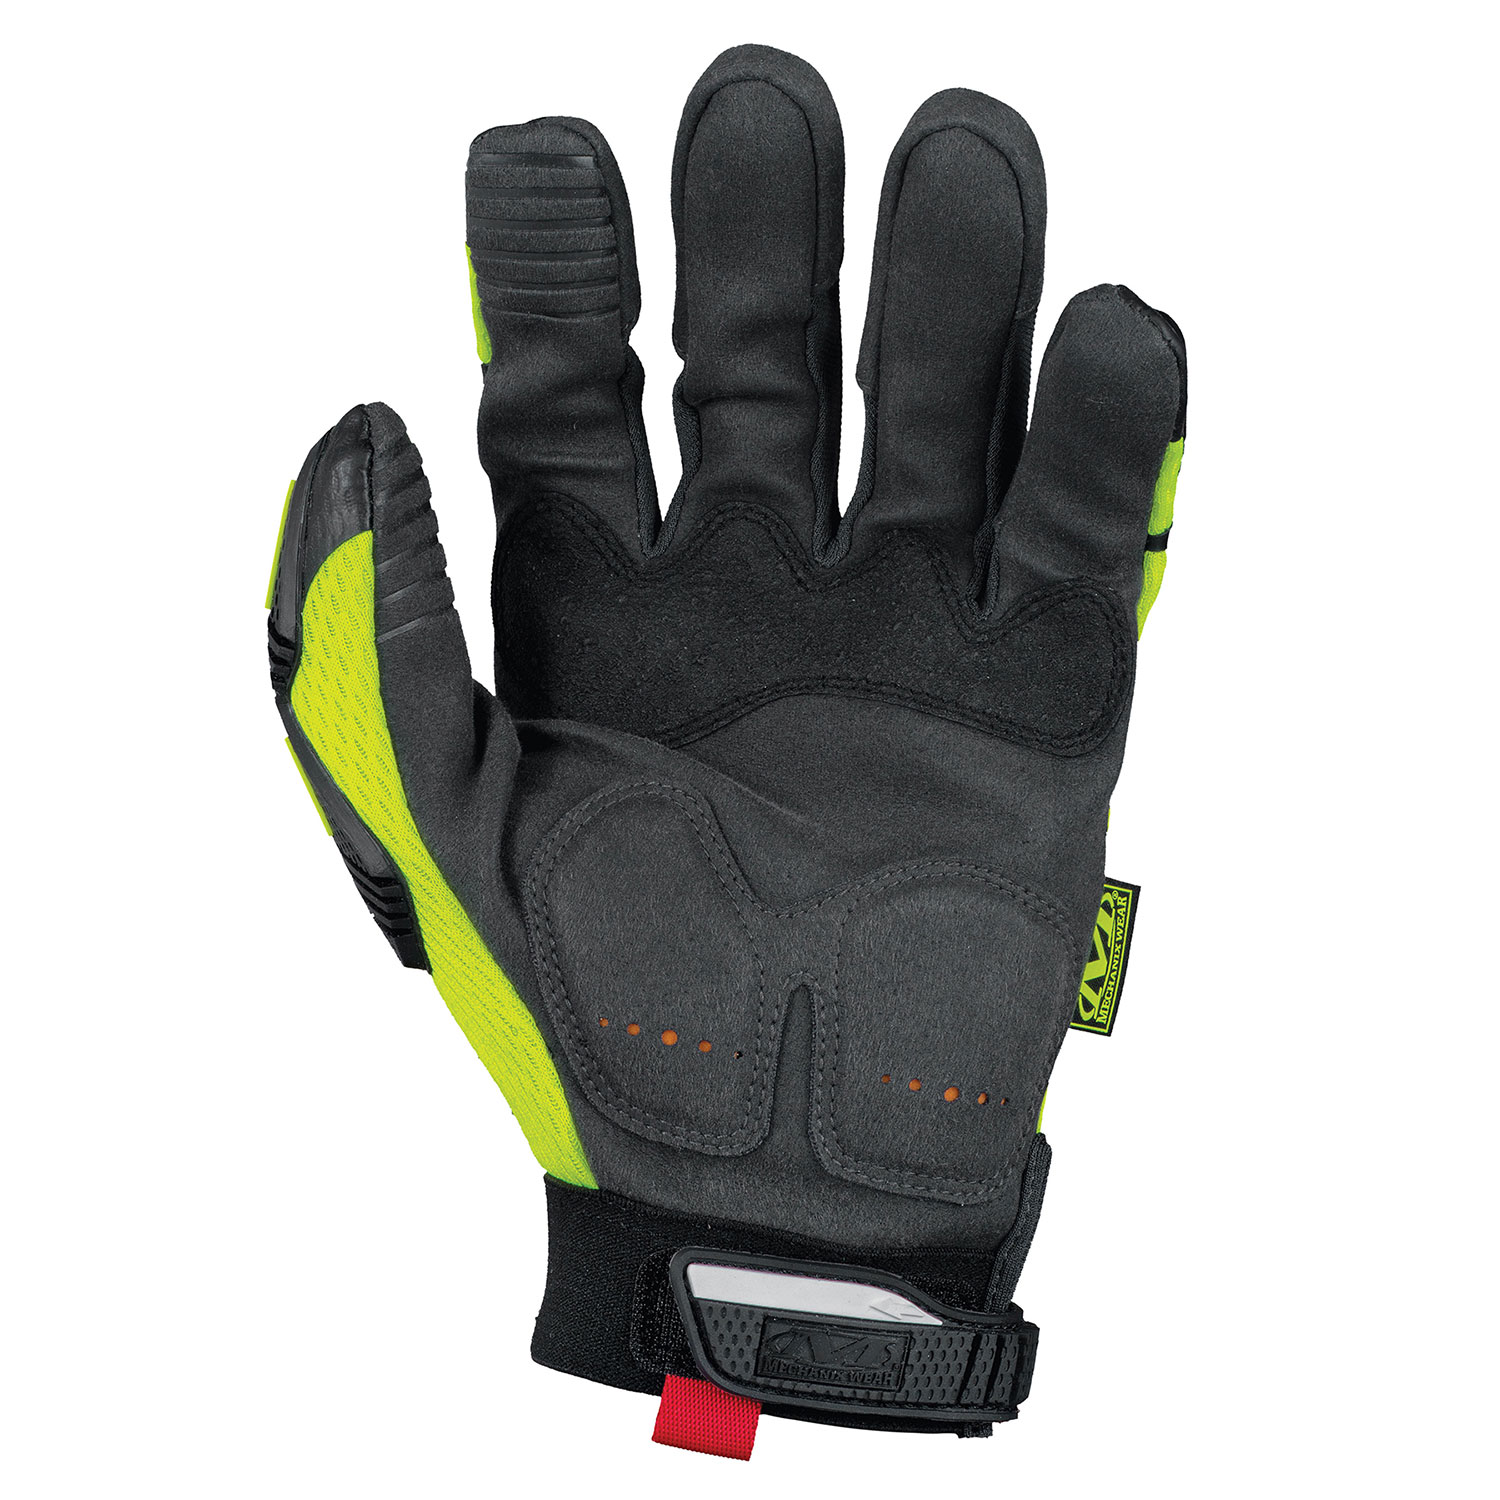 Mechanix Wear Safety M-Pact Gloves